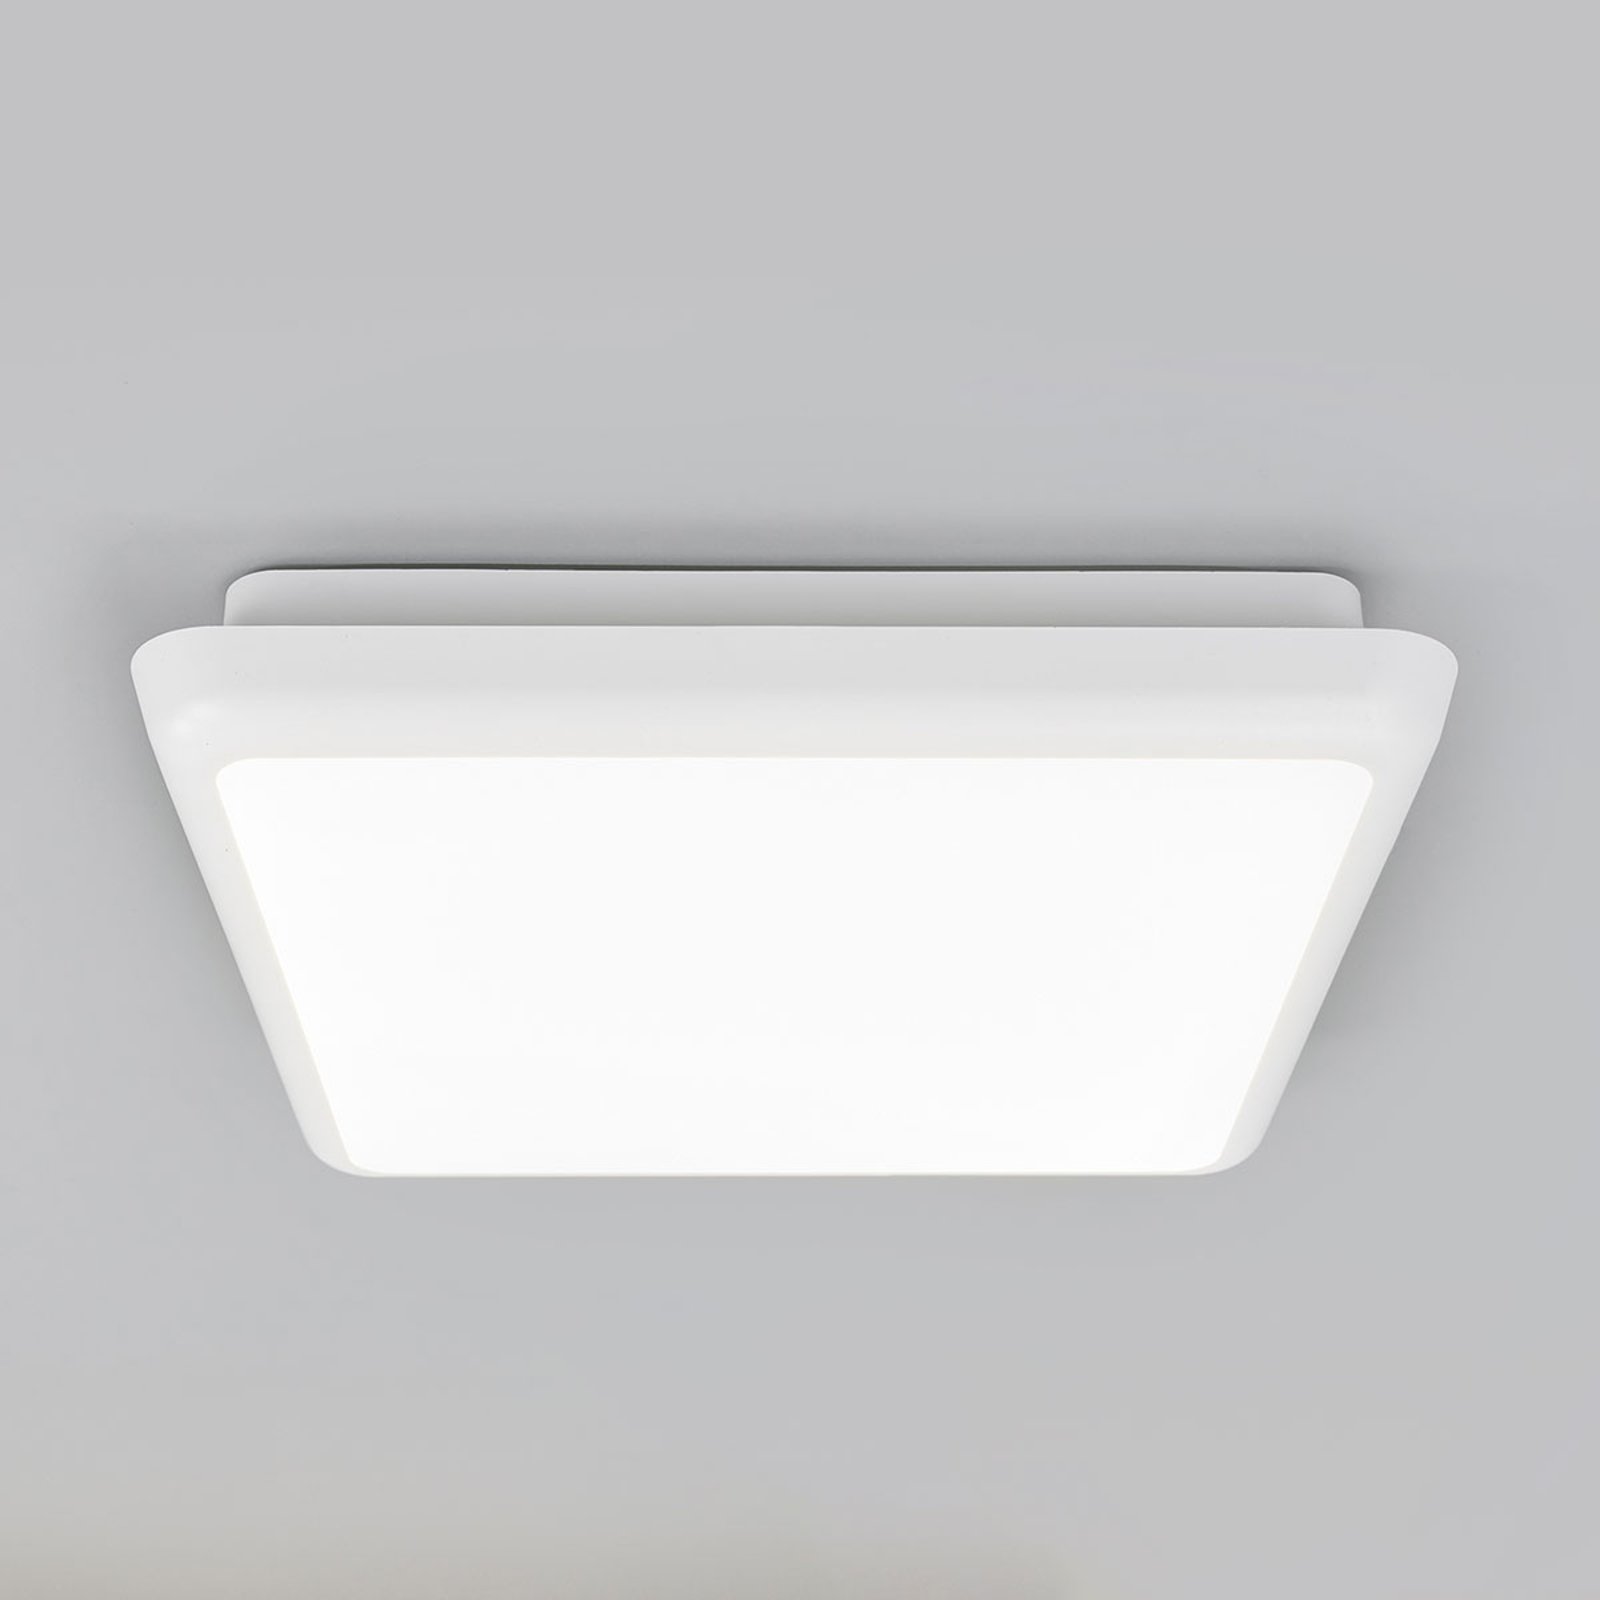 Plafón LED Augustin con forma cuadrada, 25 cm